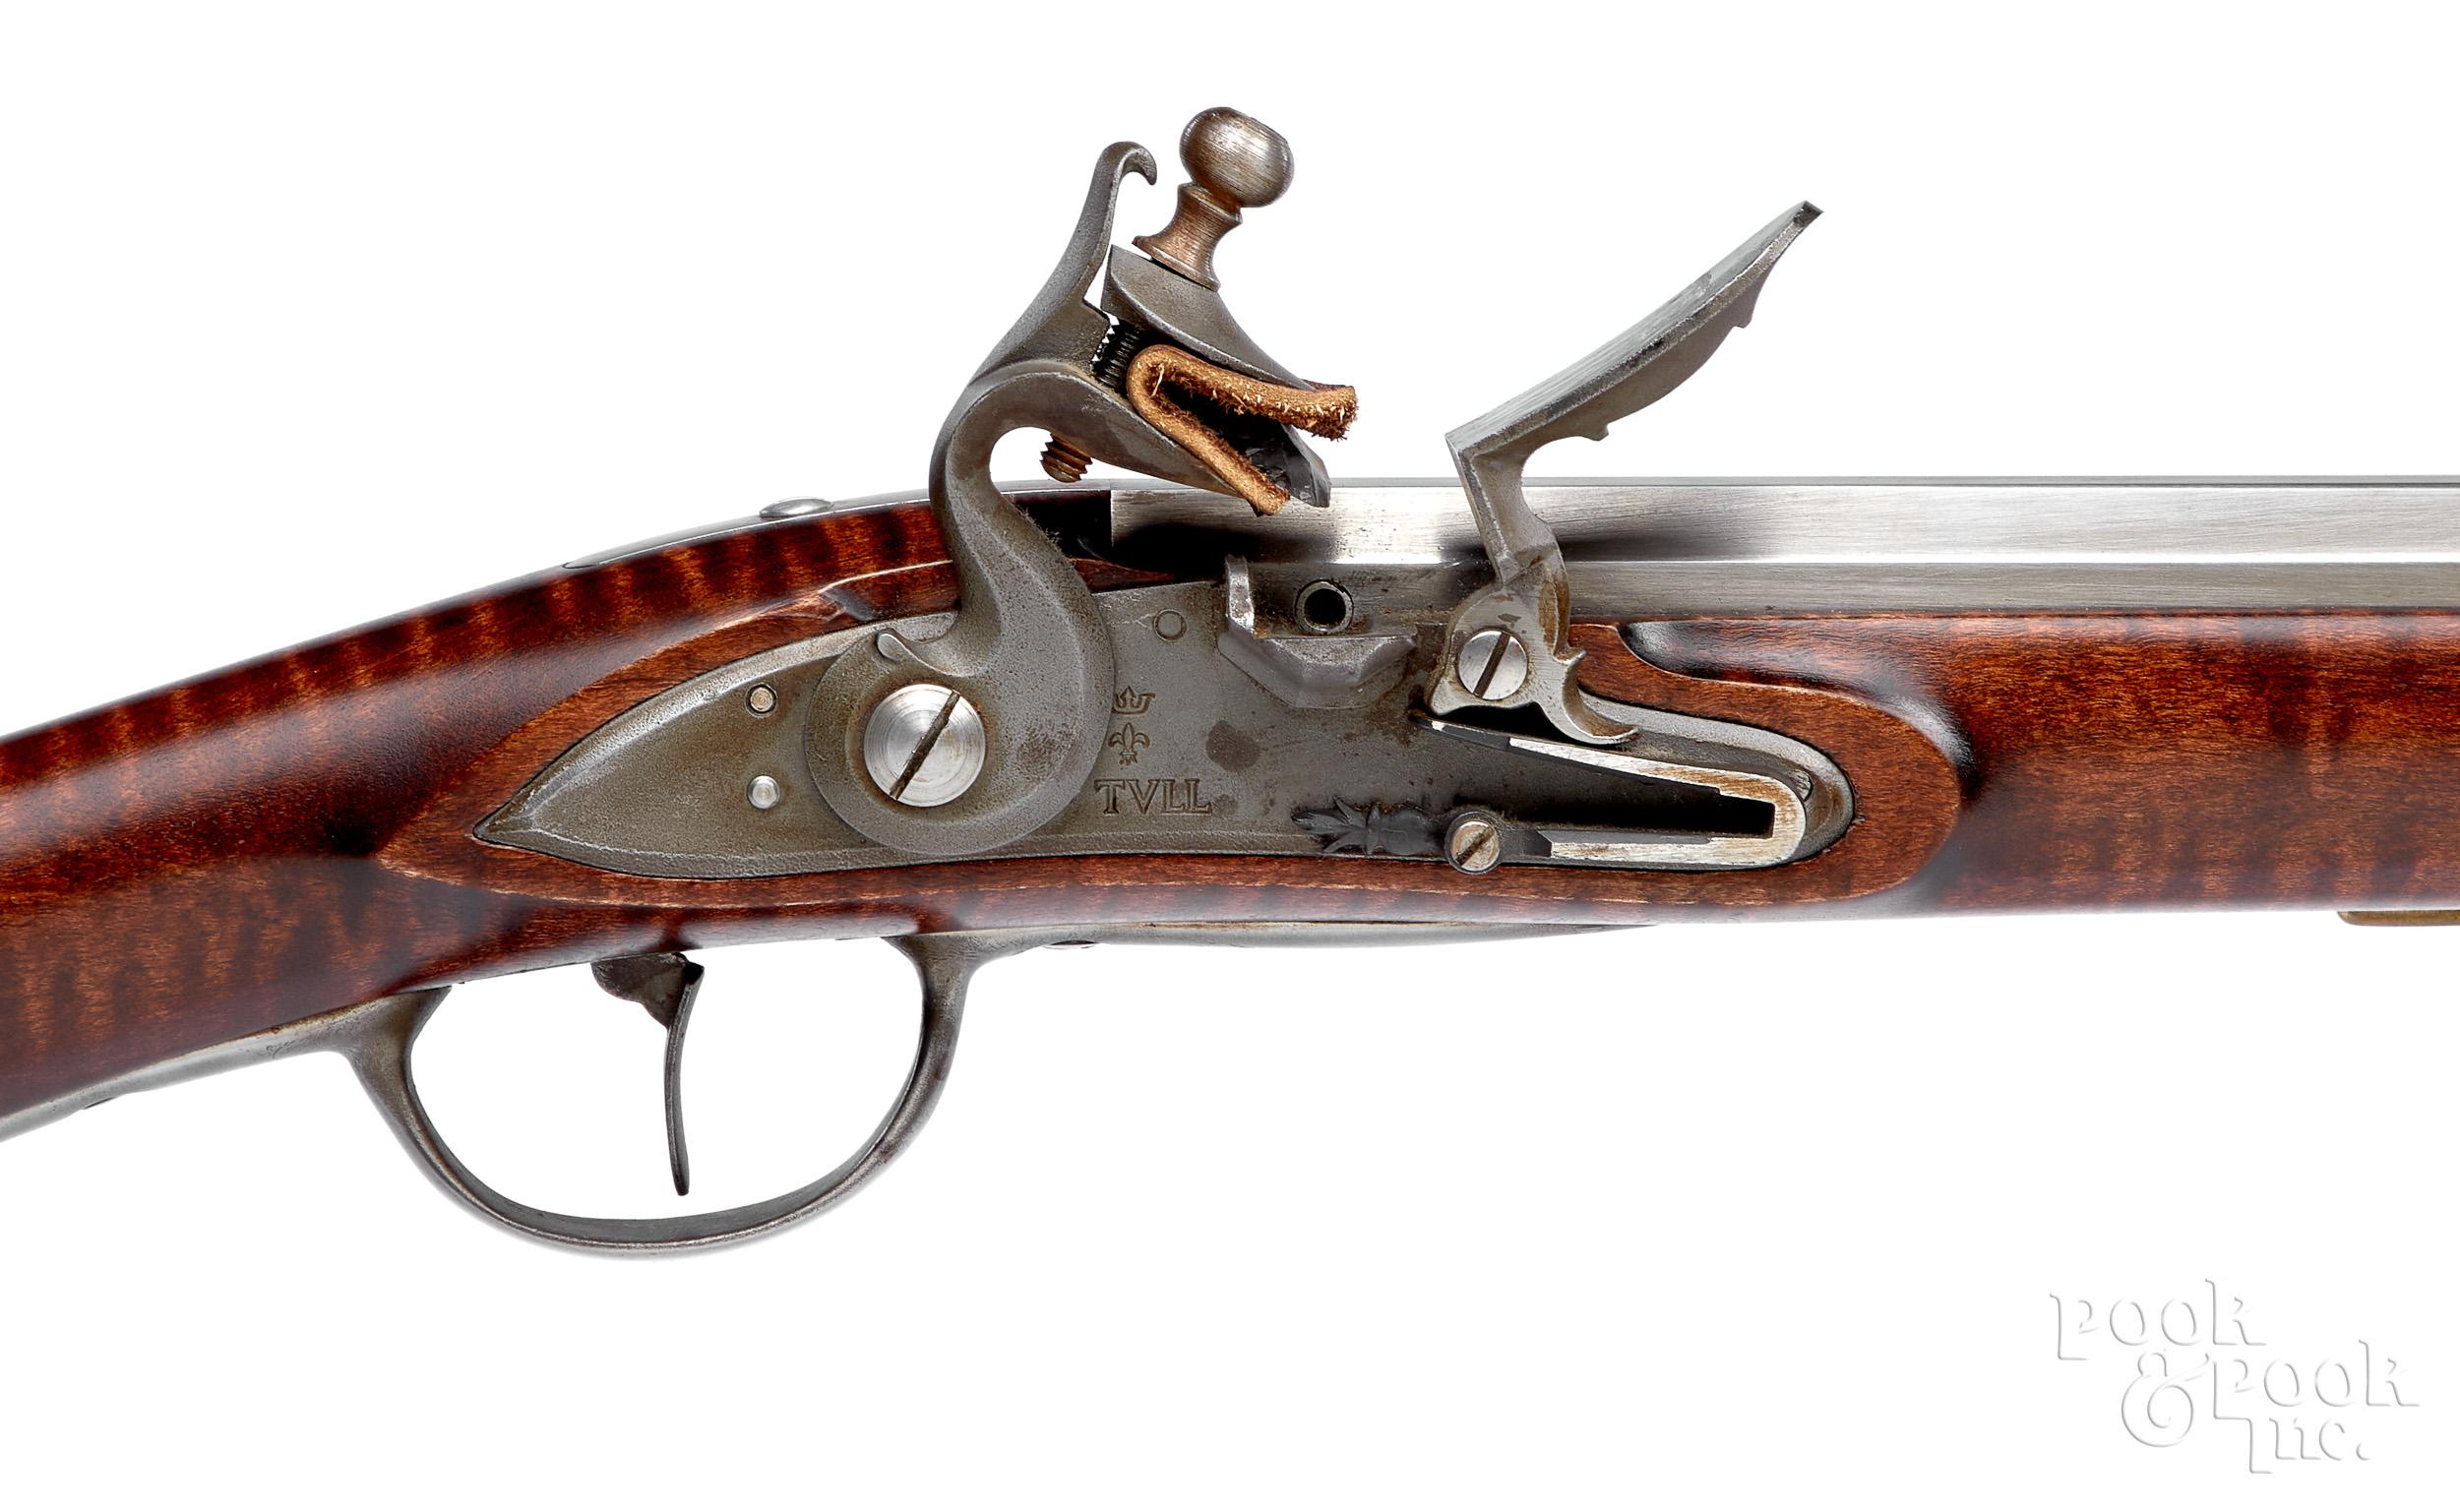 Contemporary flintlock rifle